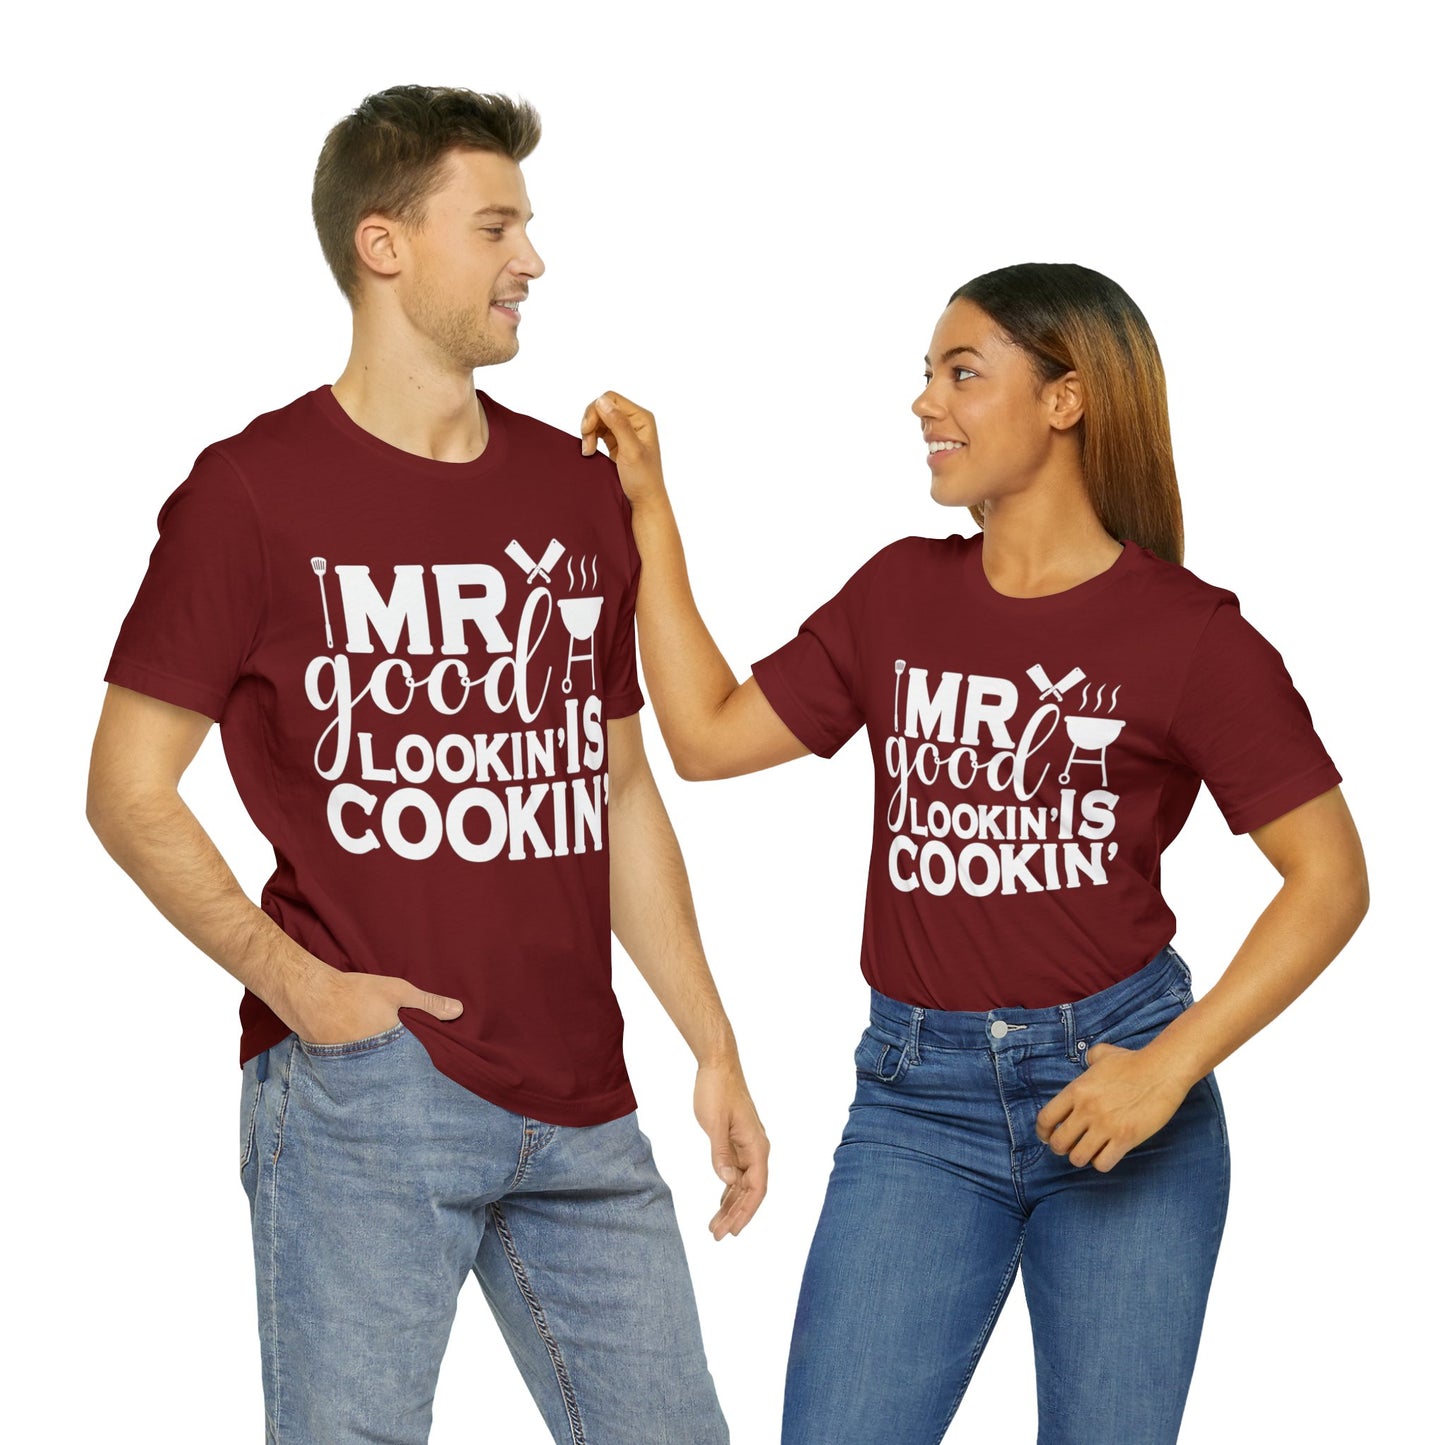 Mr good lookin is cookin T-Shirt